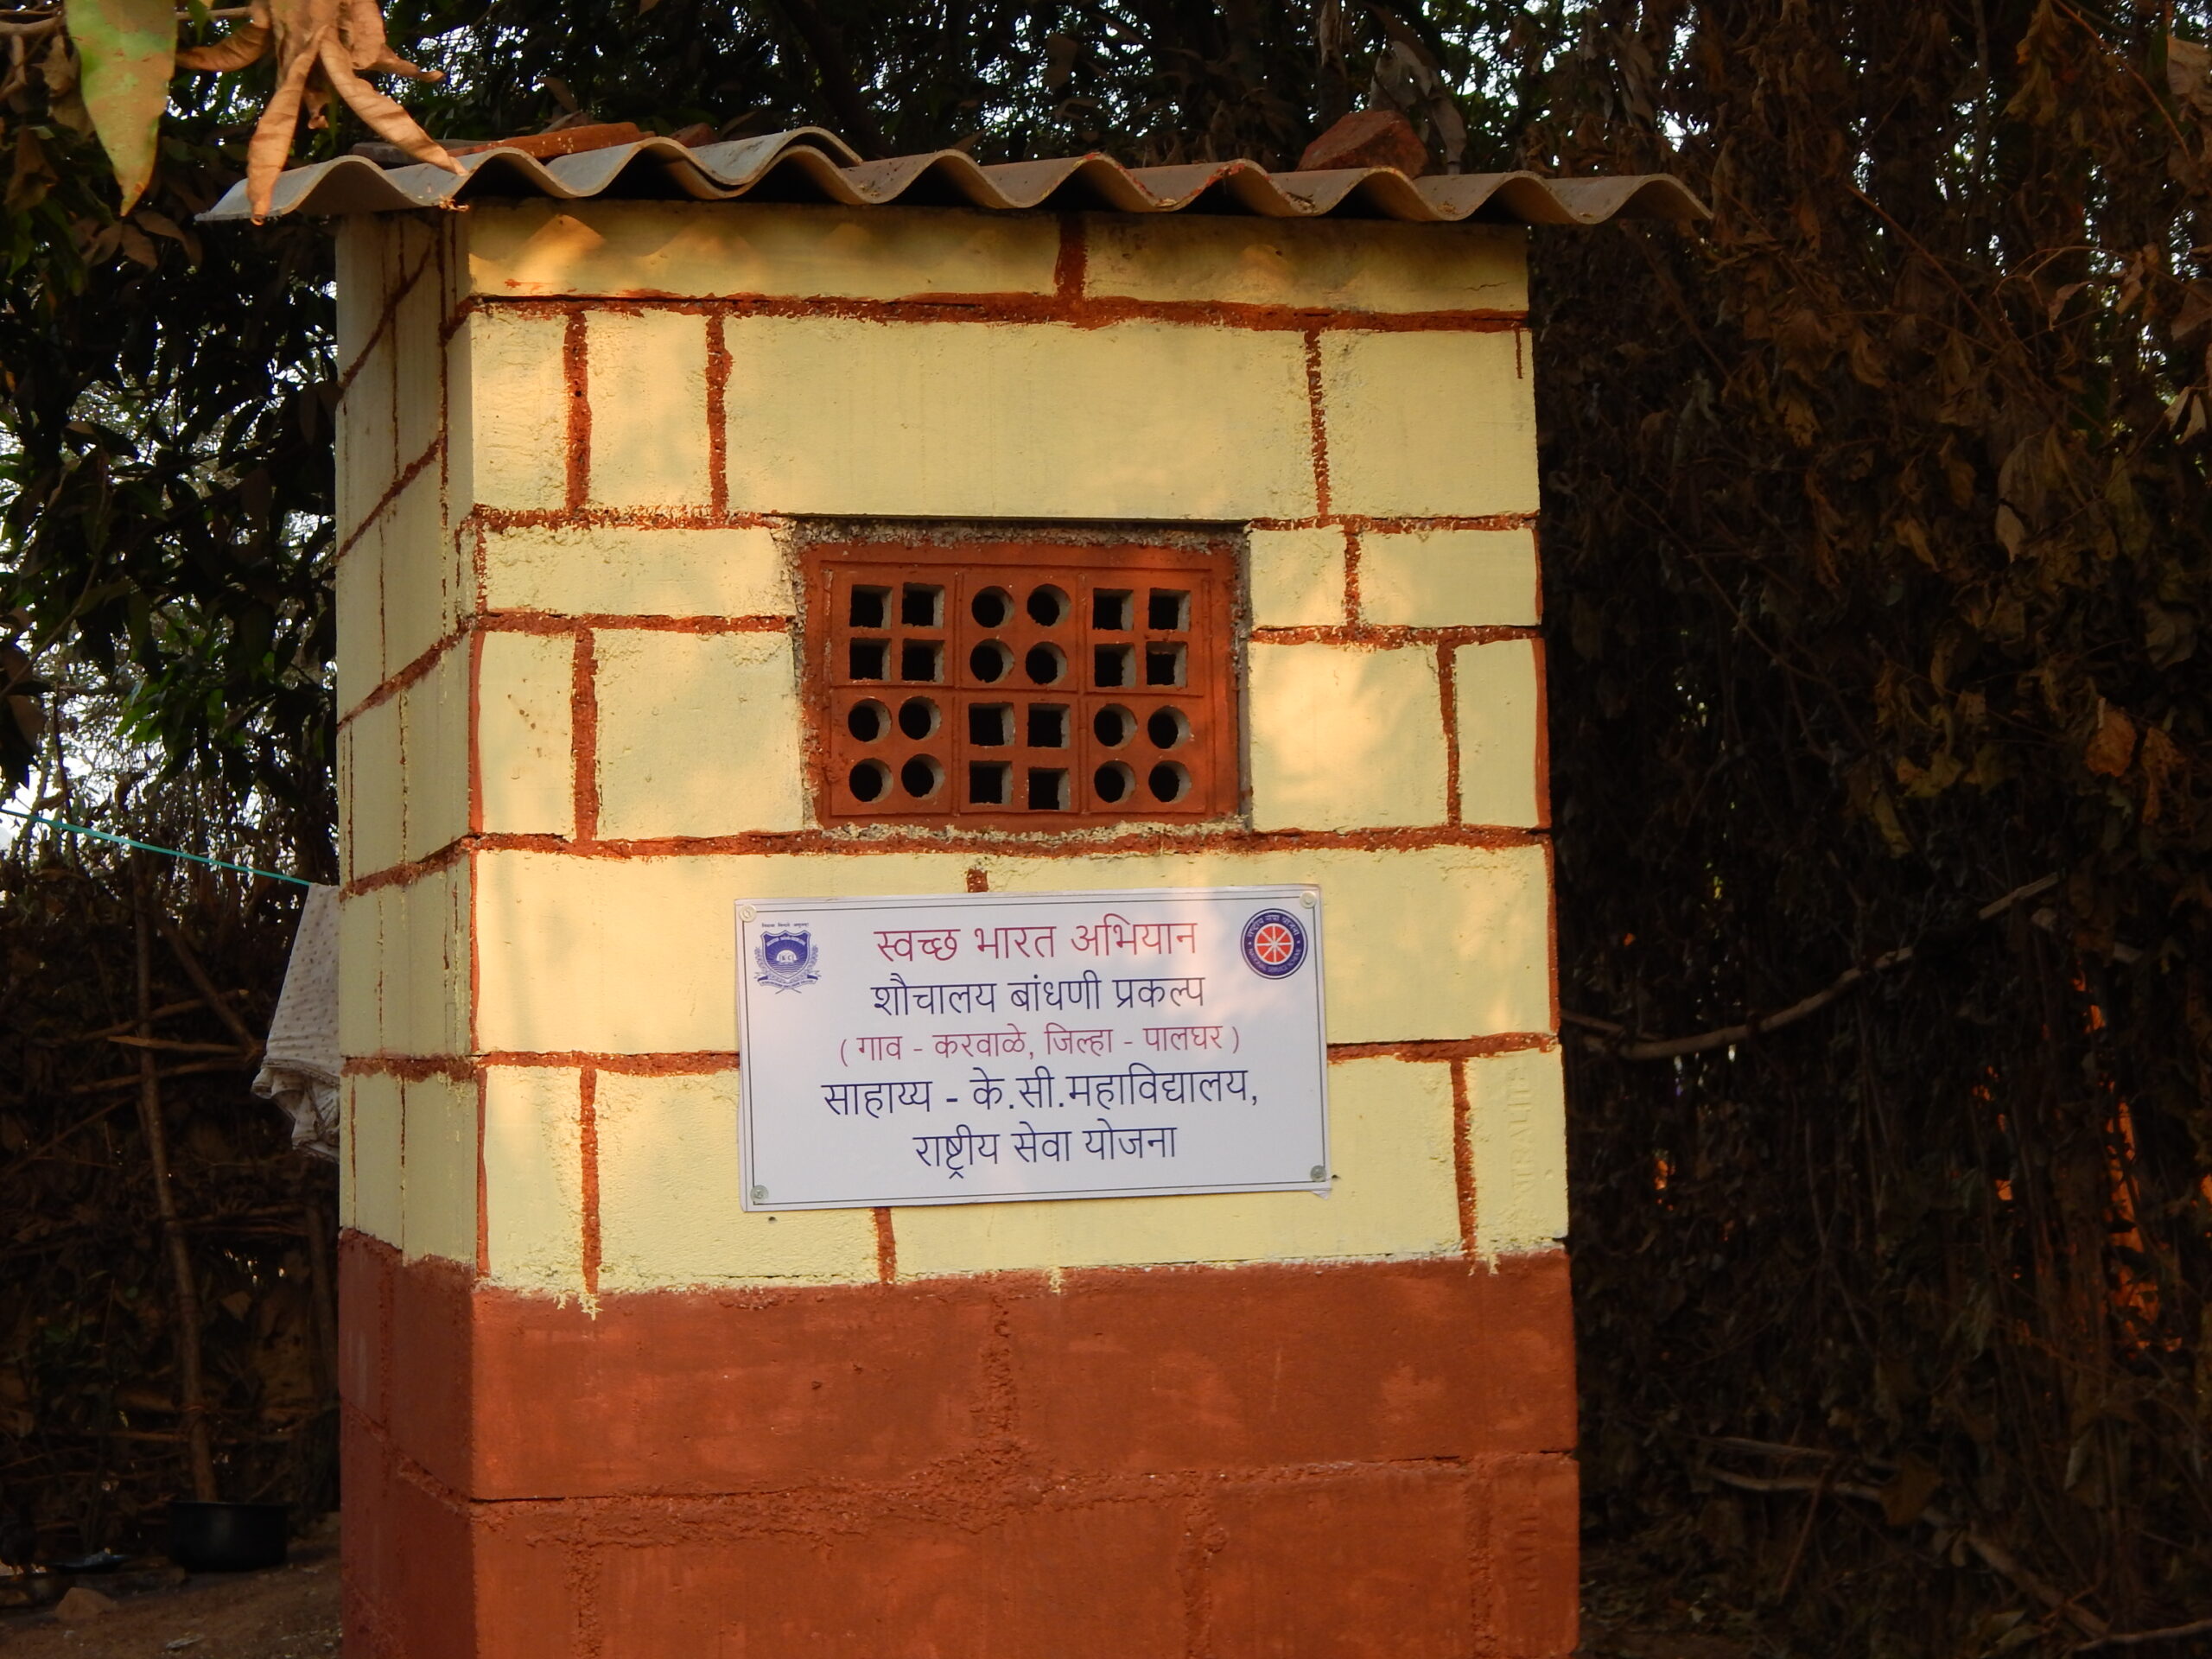 Construction of 67 toilets in Village Karwale